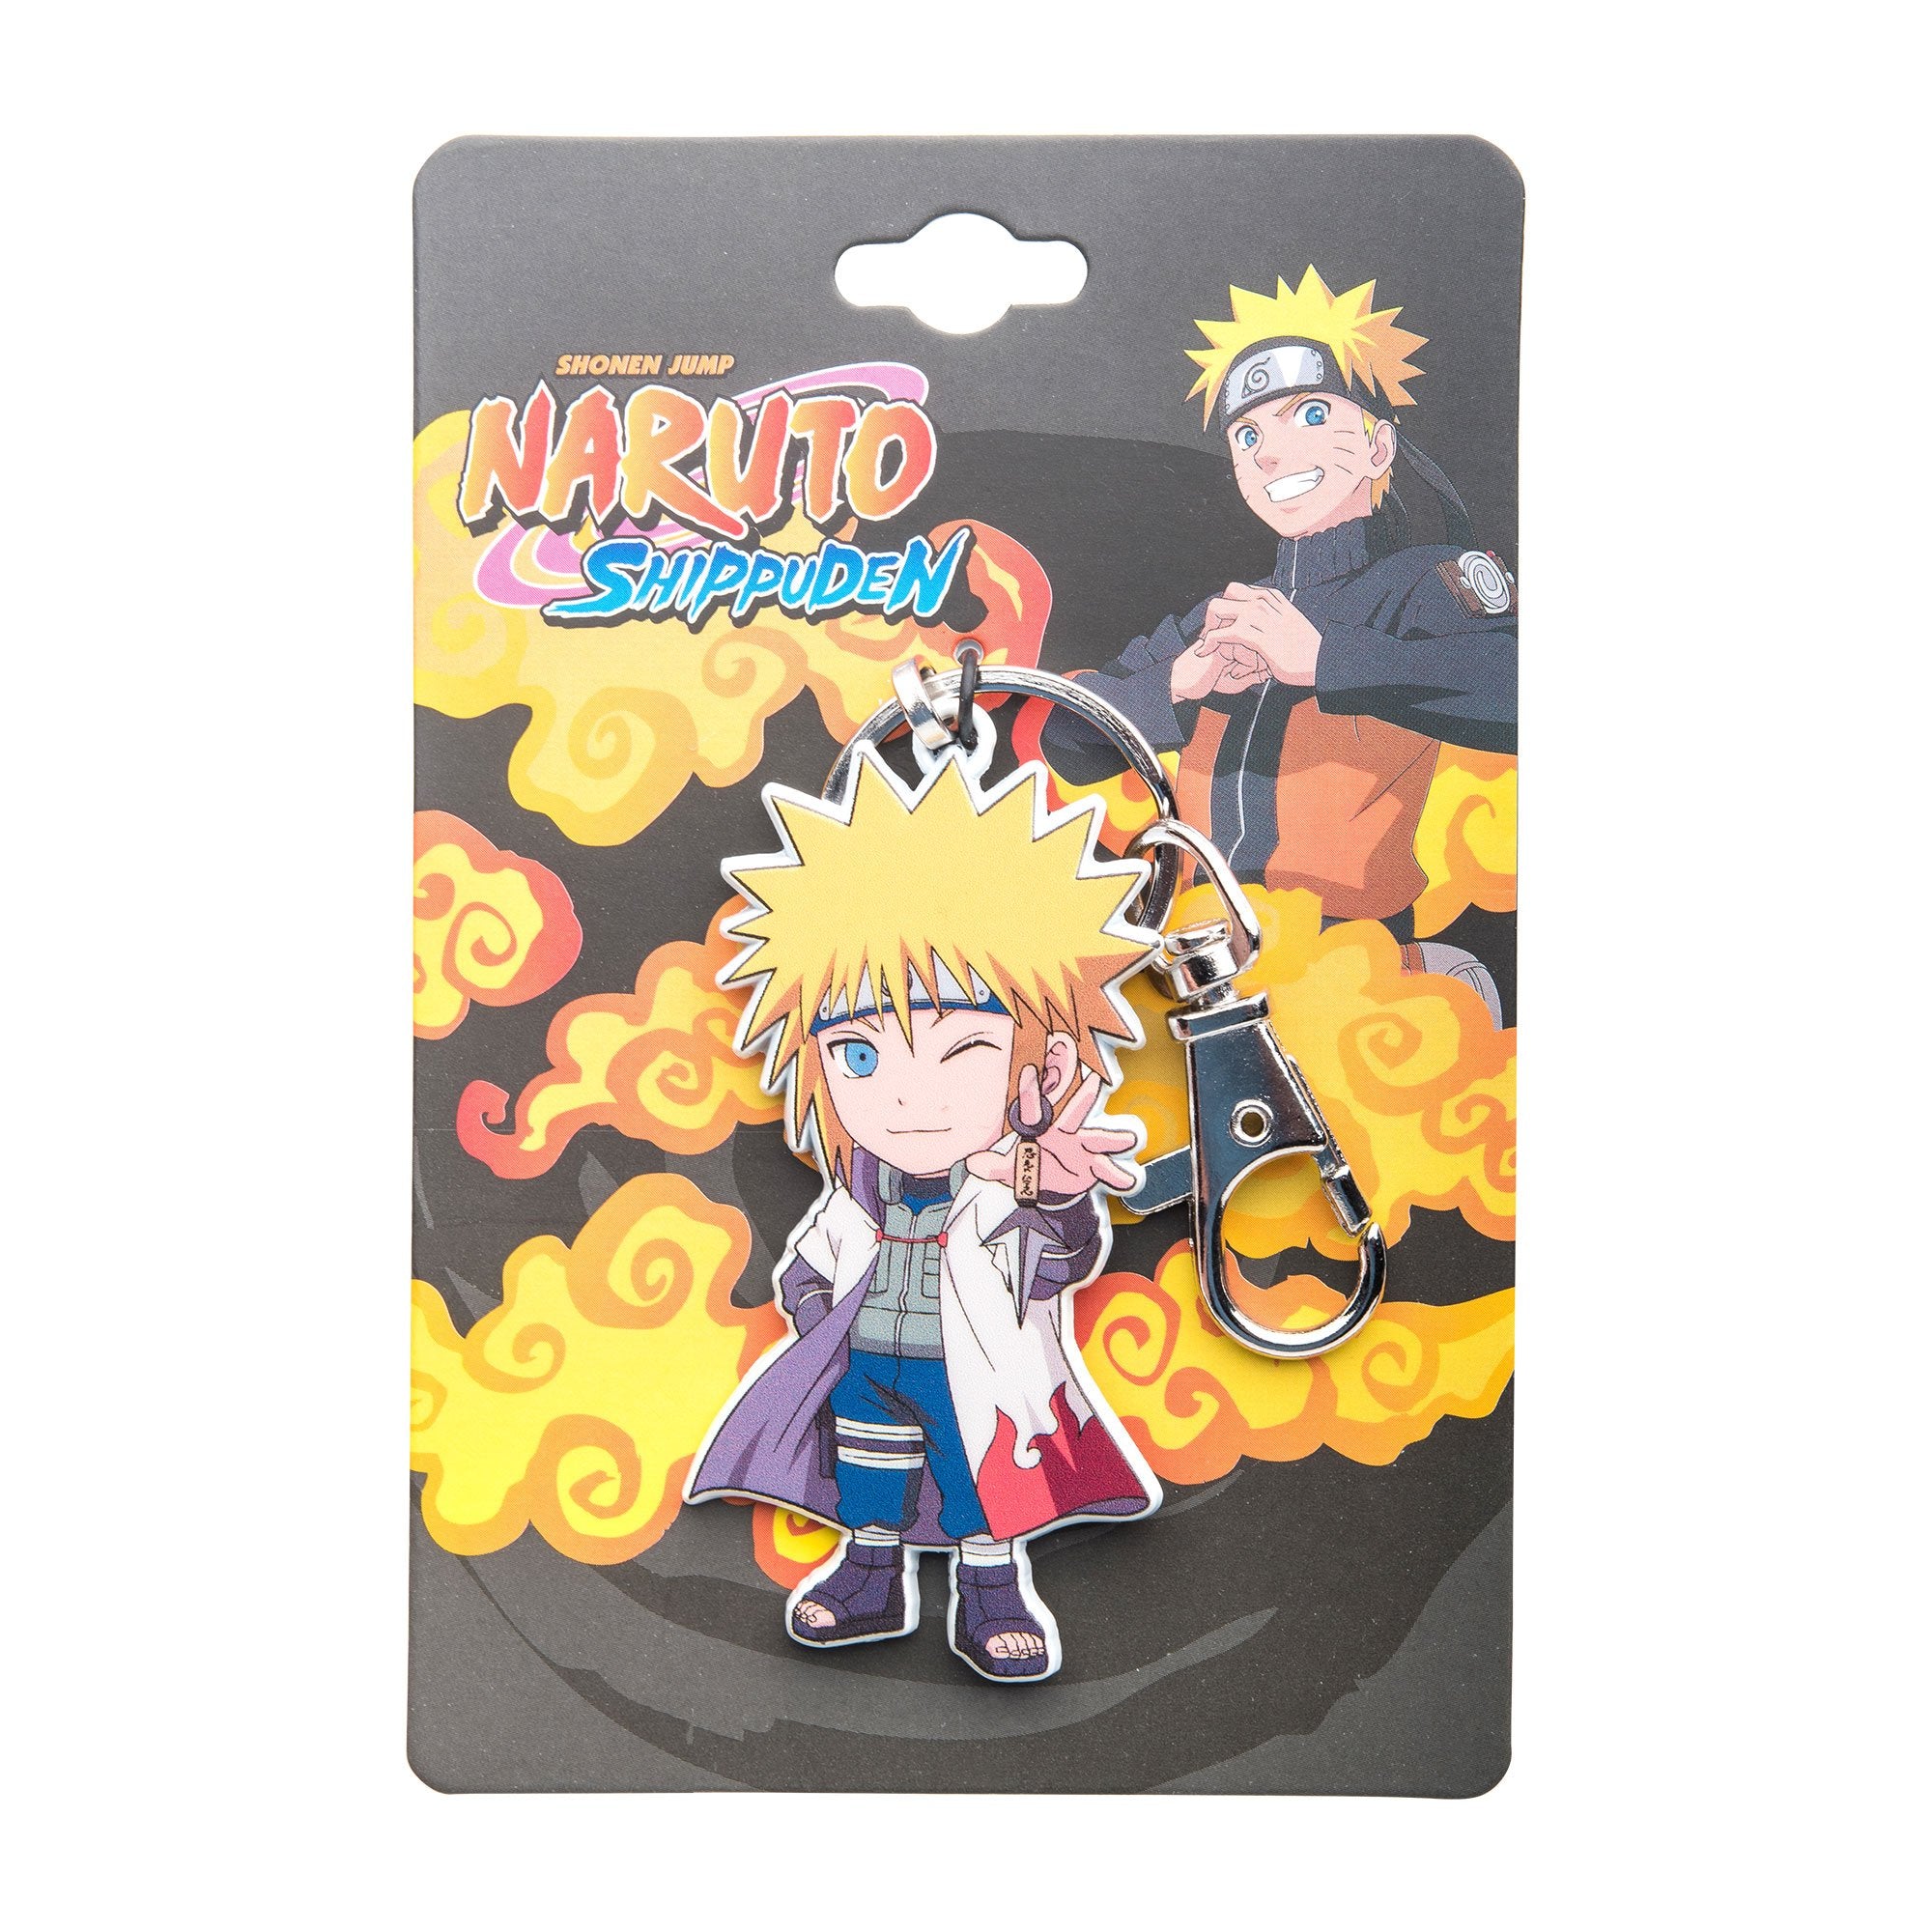 Naruto Chibi Minato Keychain